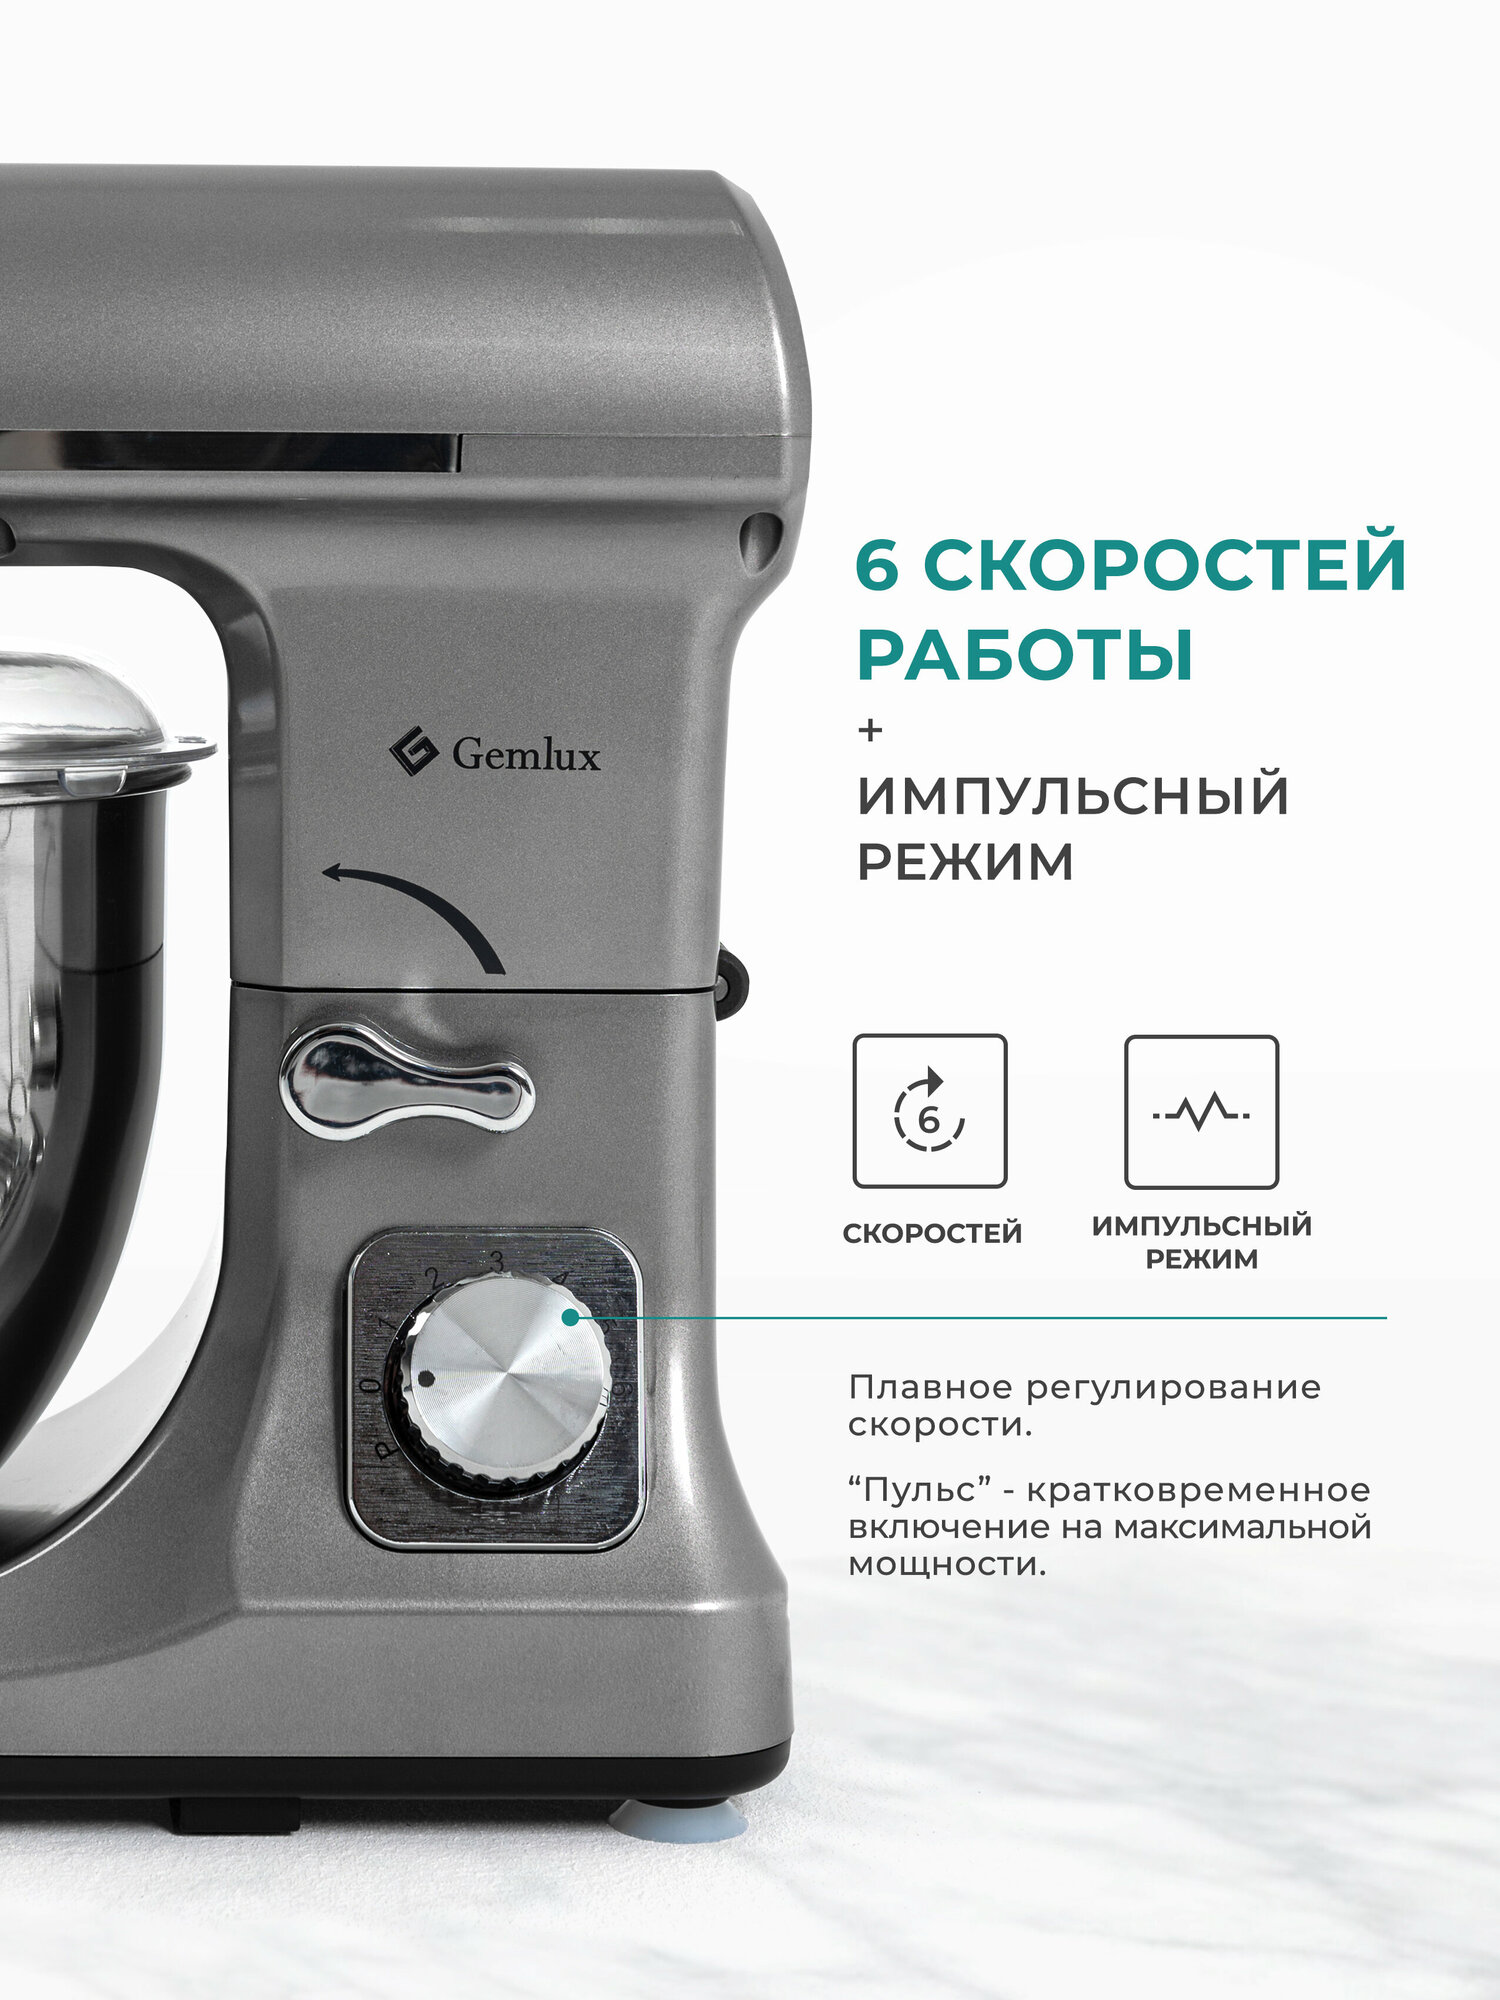 Кухонная машина Gemlux - фото №8